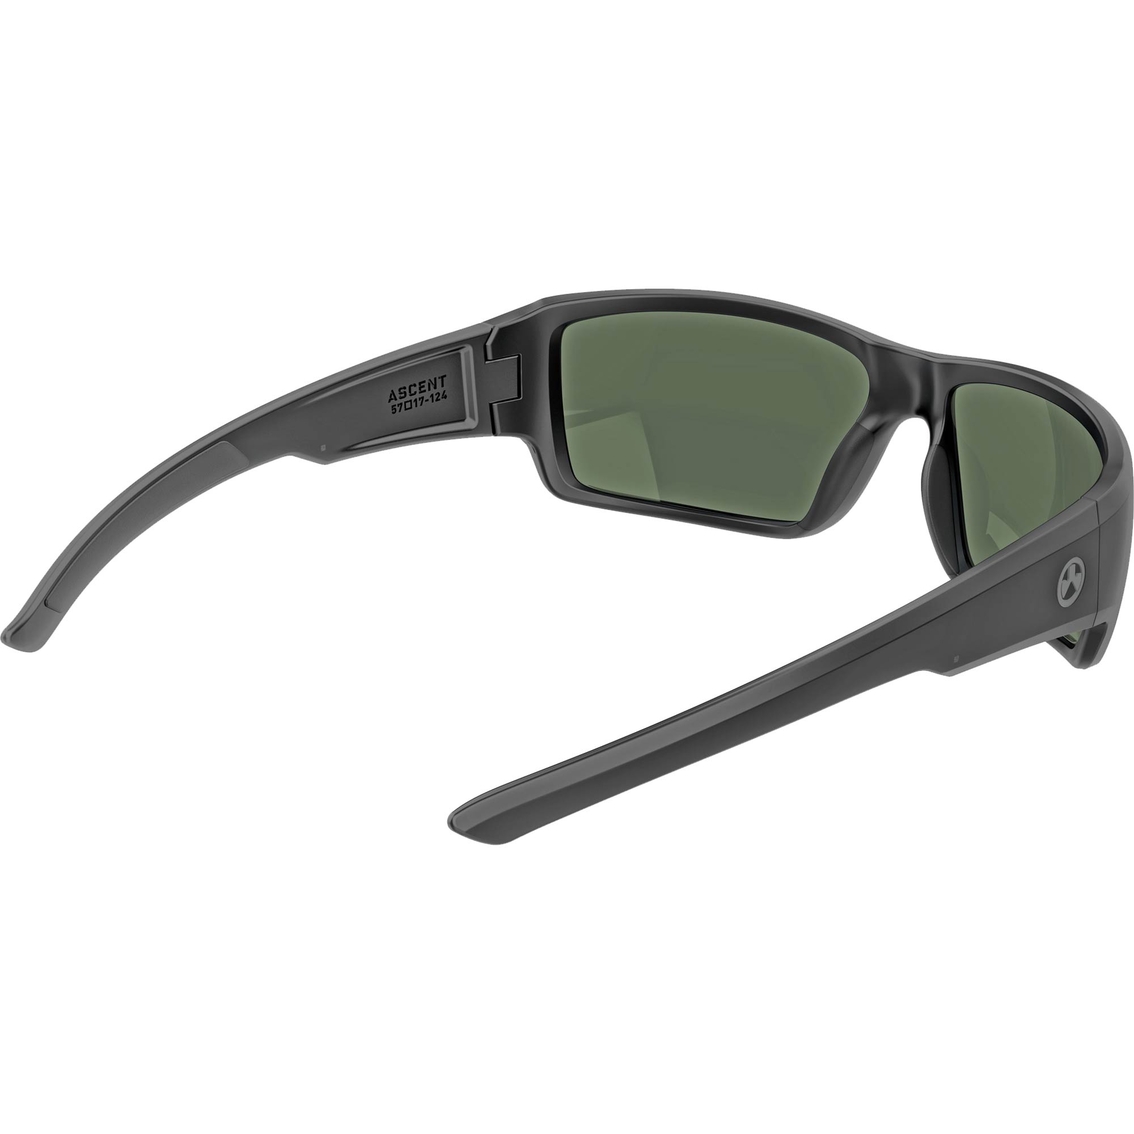 Magpul Ascent Eyewear Black Frame Polarized Gray/Green Lens - Image 2 of 2